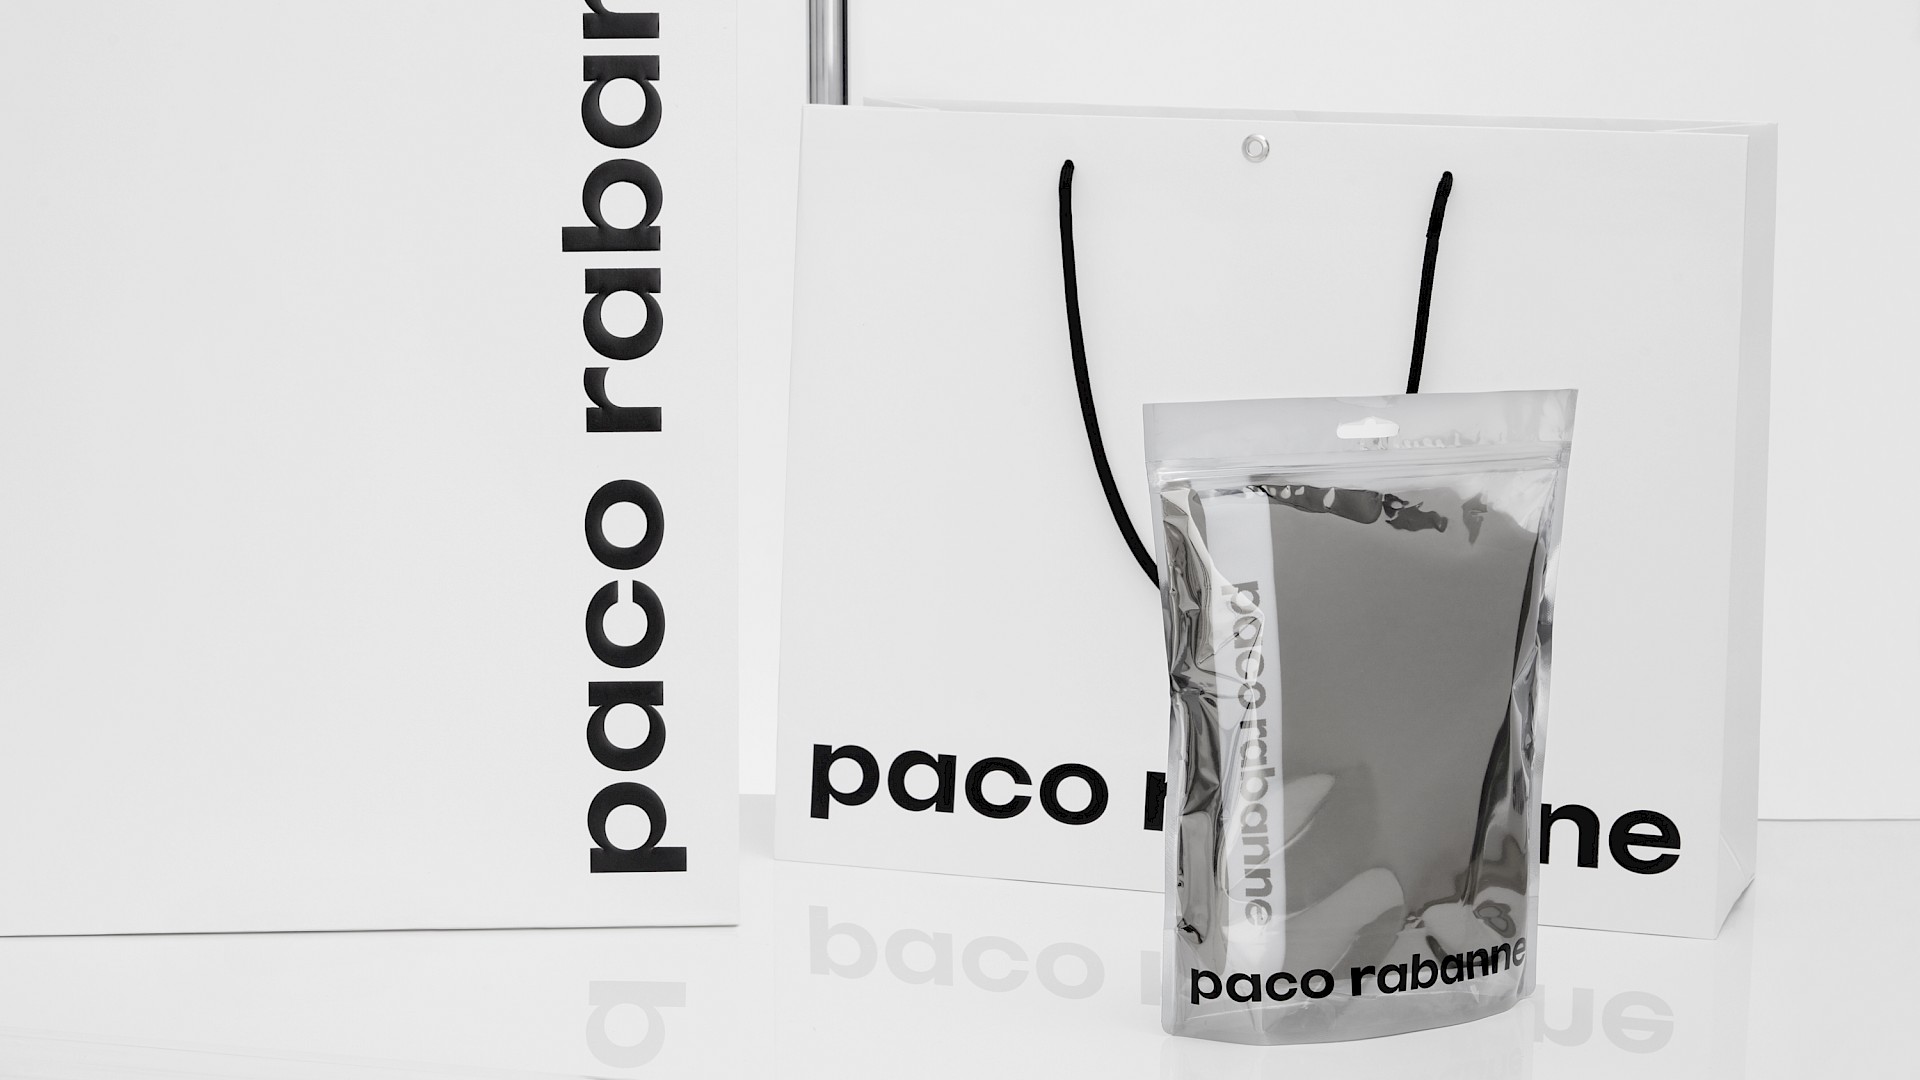 Paco Rabanne Packaging - Zak Group